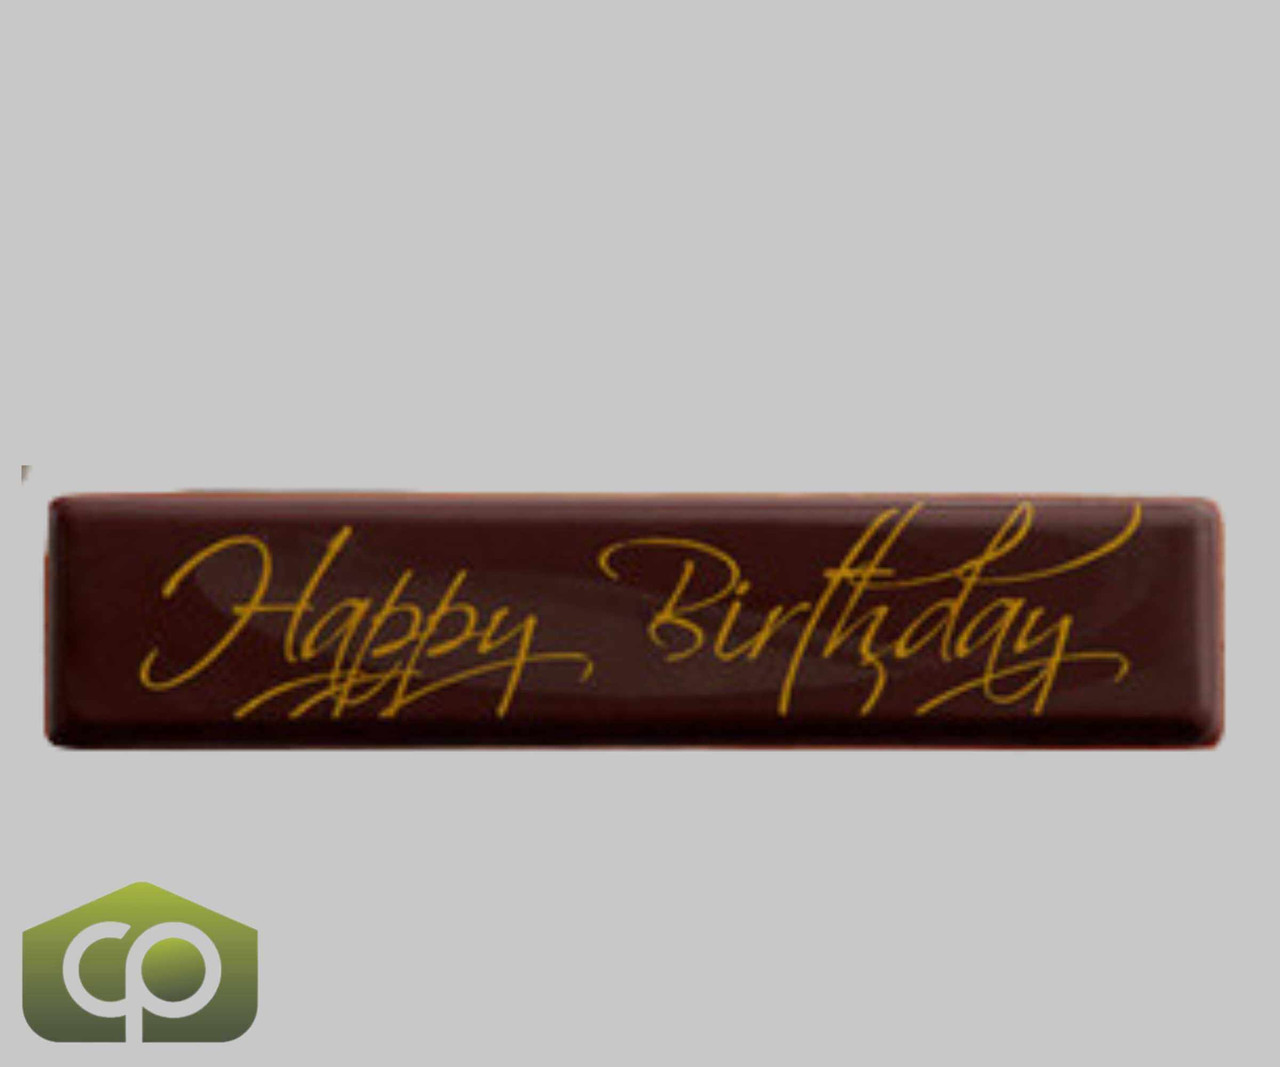 Chocolatree Happy Birthday Chocolate Decoration - 420/Case - Sweeten Birthdays with Chocolate Art